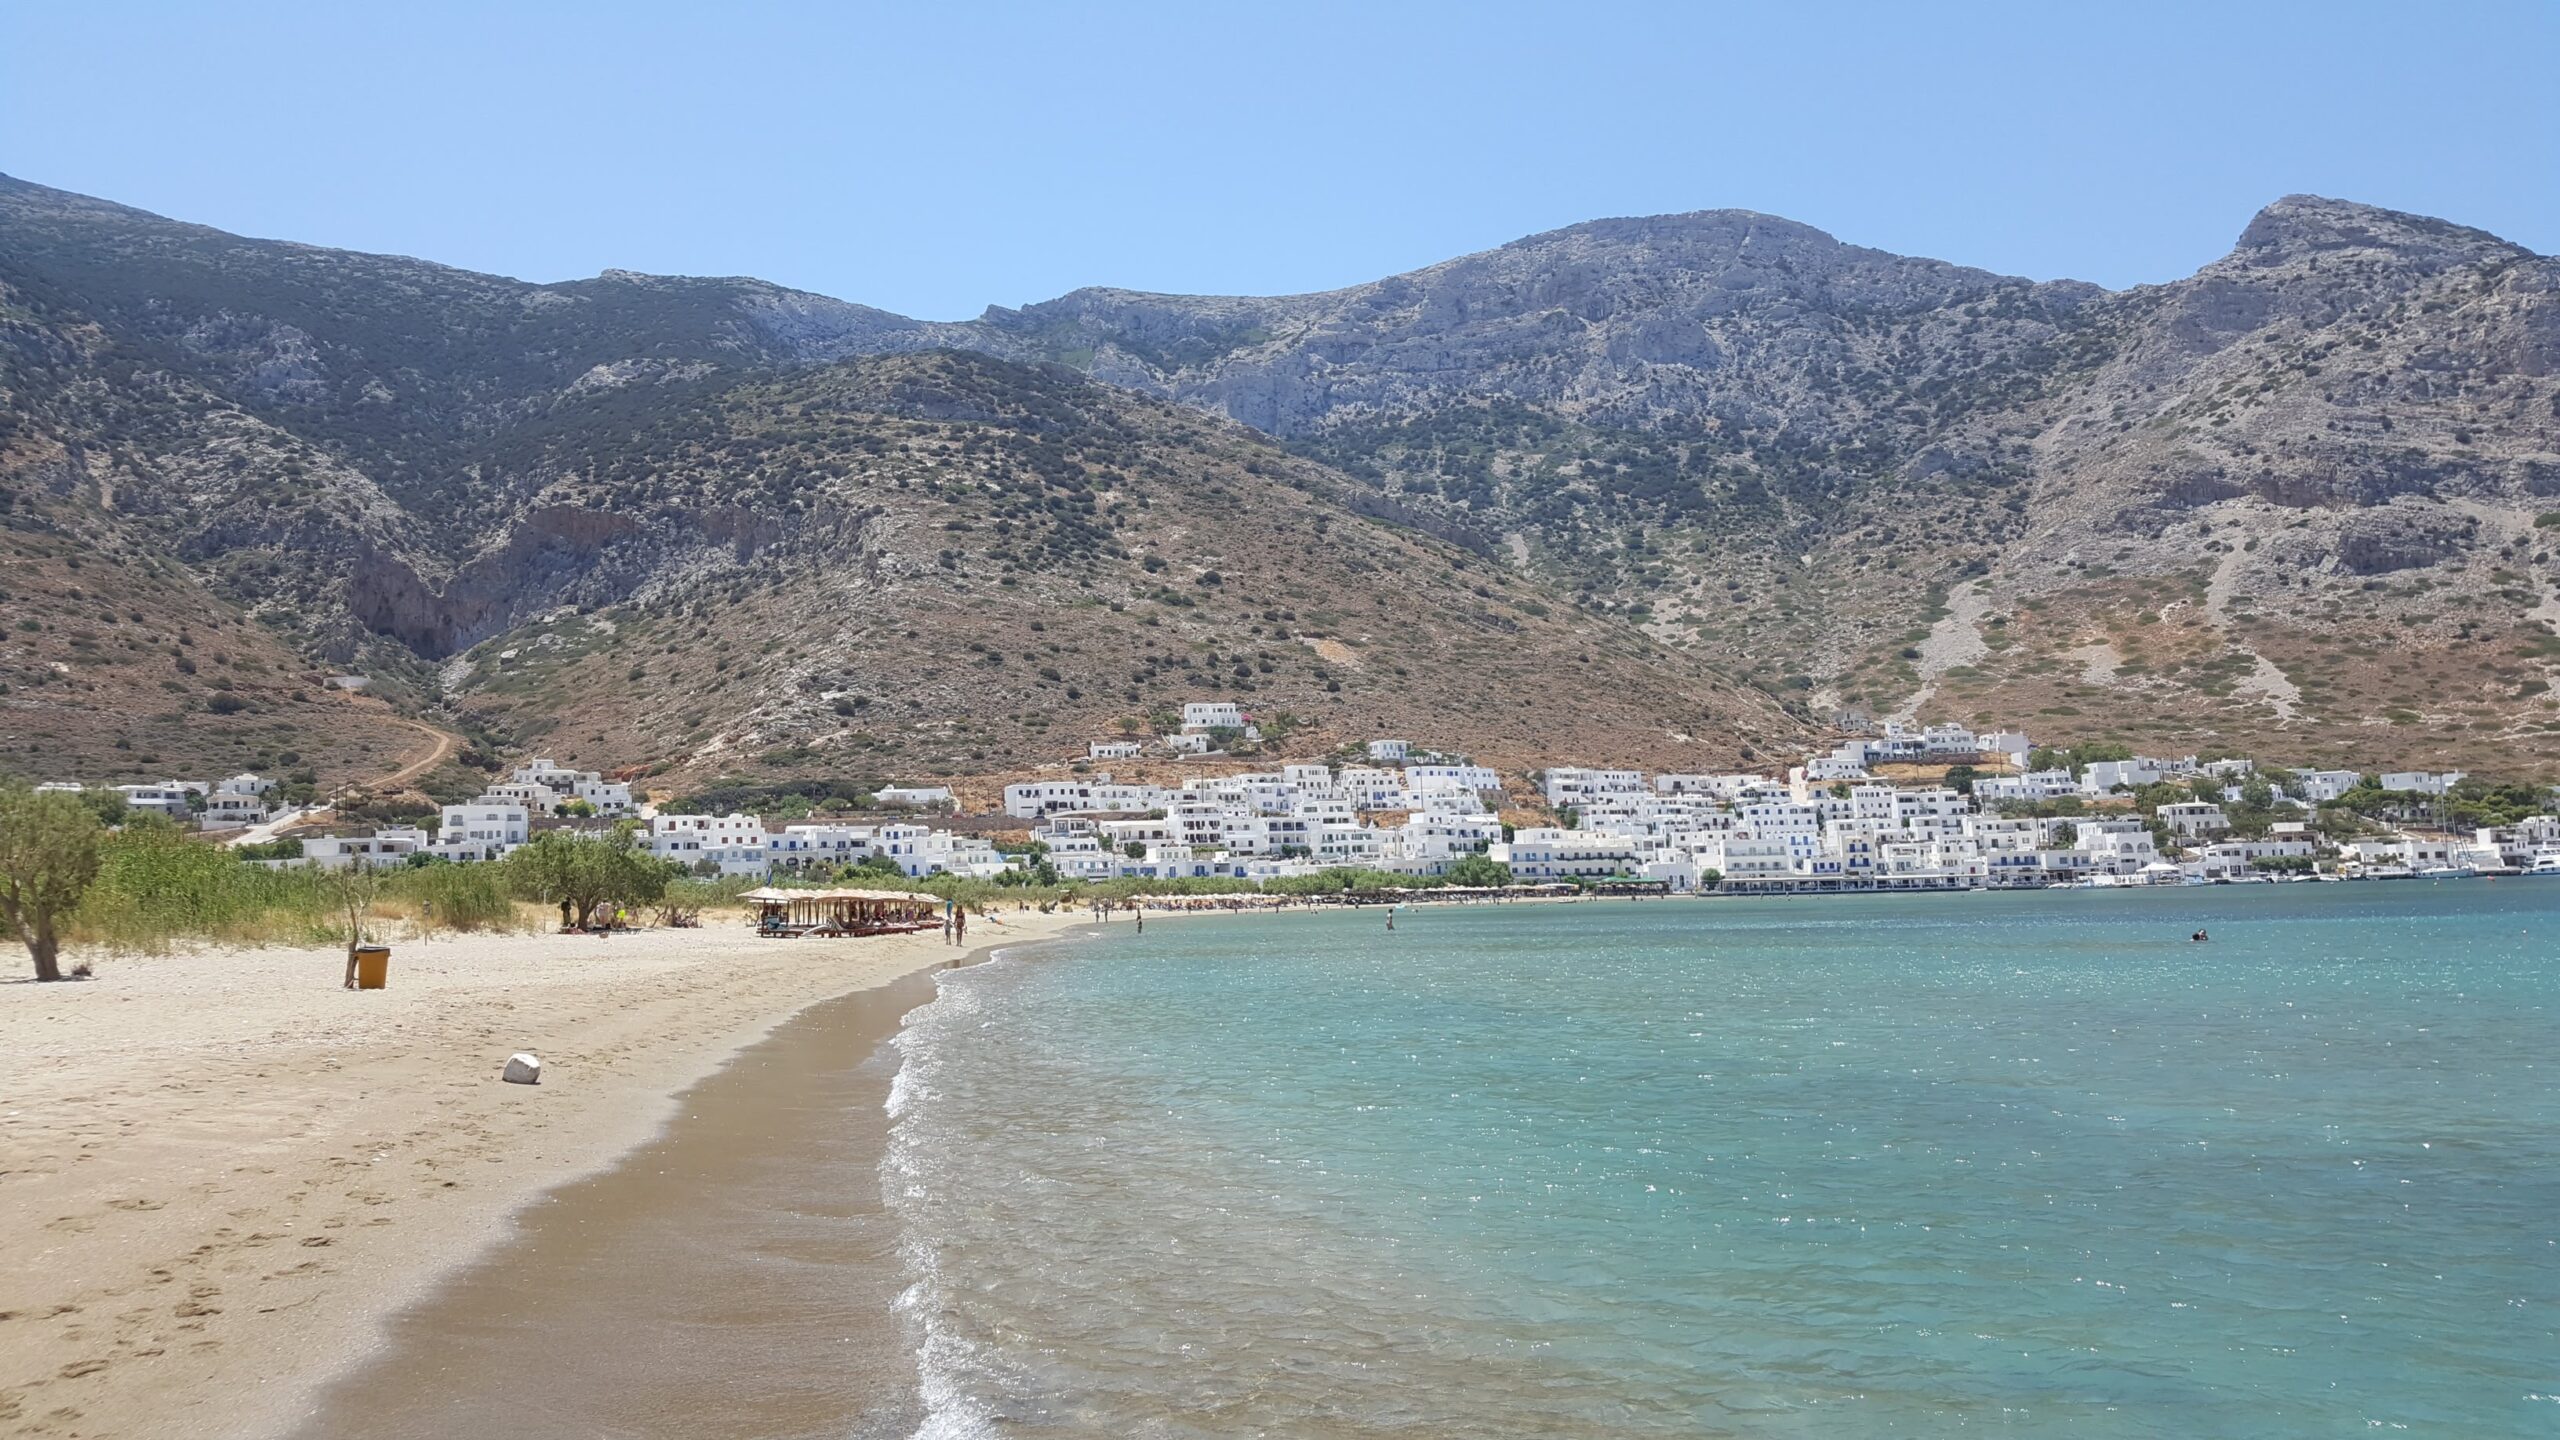 Bρετανική Express: Το πιο «νόστιμο» ελληνικό νησί που είναι τόσο όμορφο όσο η Ρόδος και η Κρήτη, αλλά χωρίς τα μαζικά πλήθη τουριστών